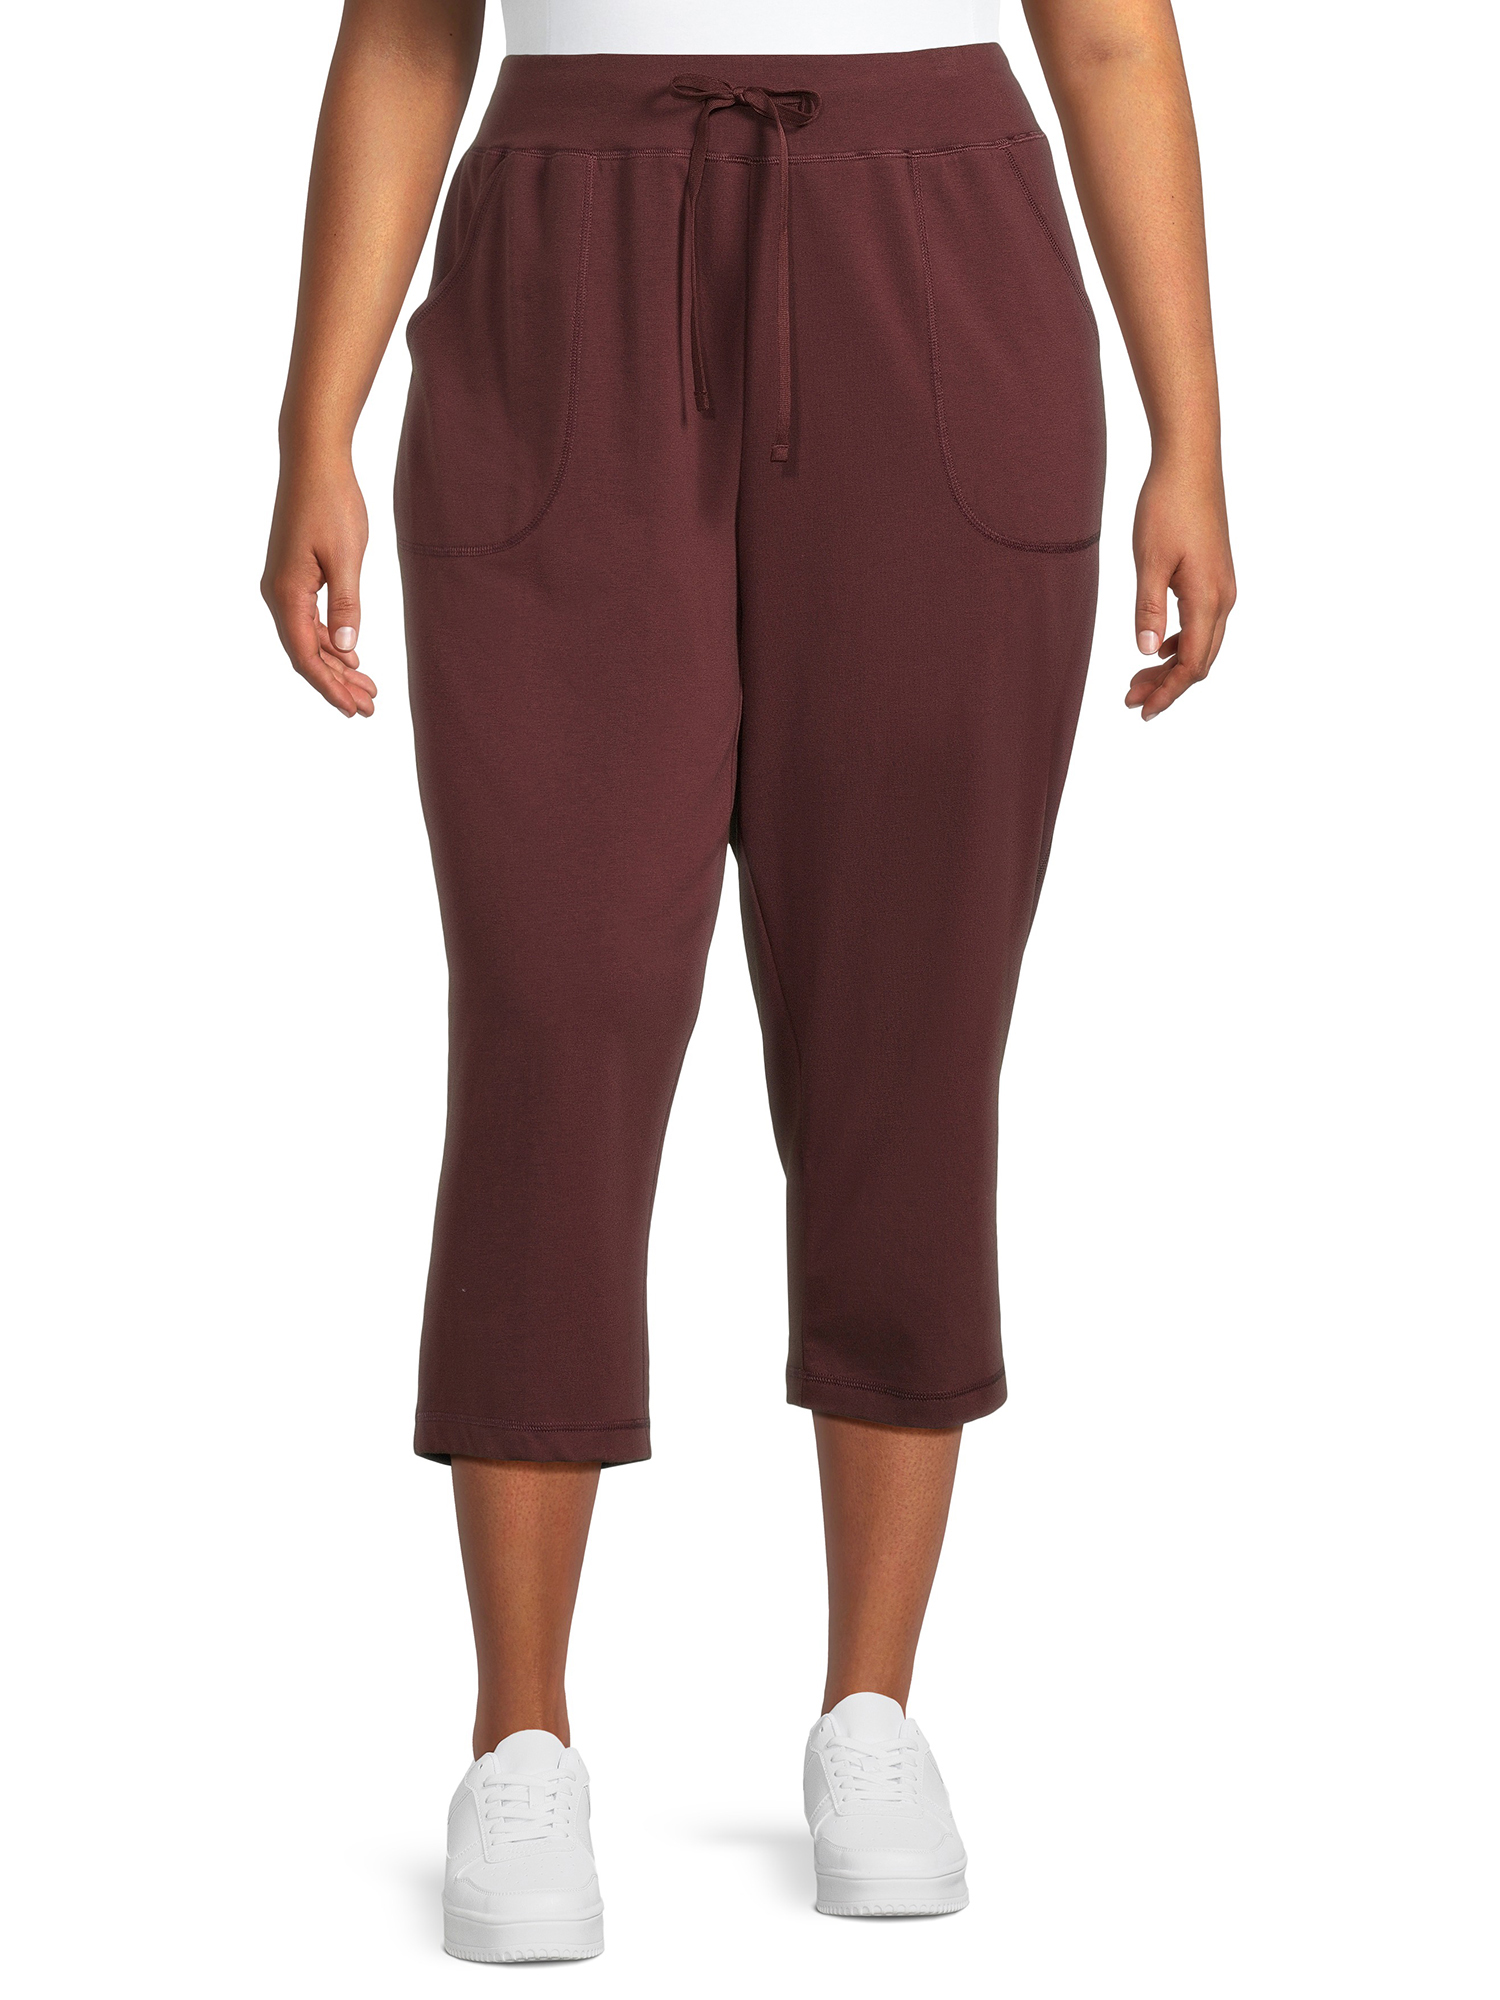 Athletic Works Women's Plus Size Knit Capri Pants, 22” Inseam, Sizes 1X ...